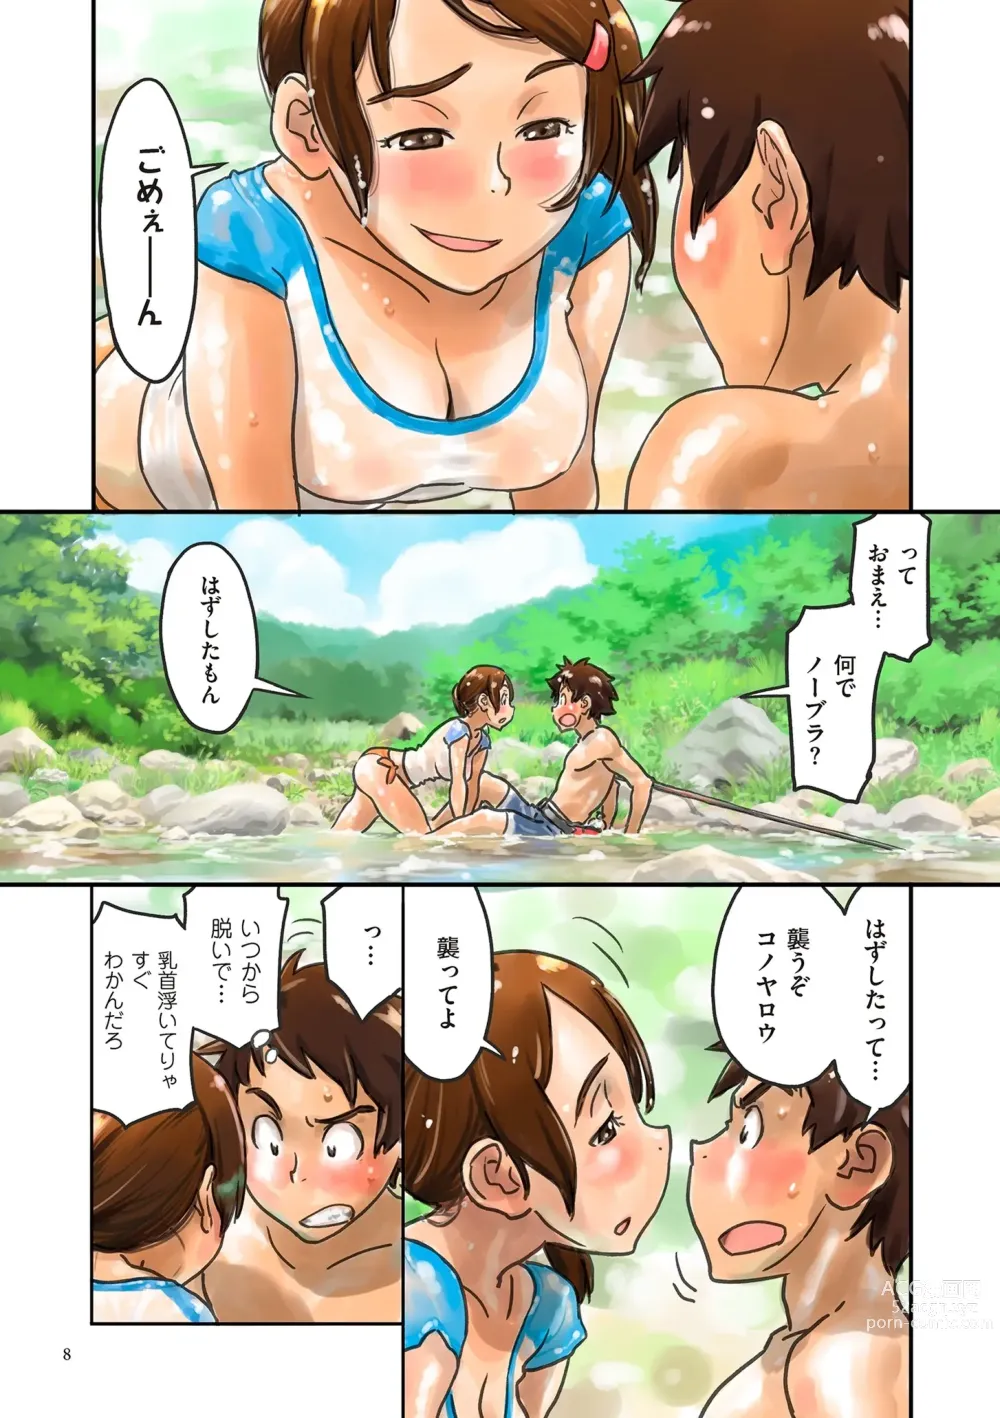 Page 8 of manga Fujicolor